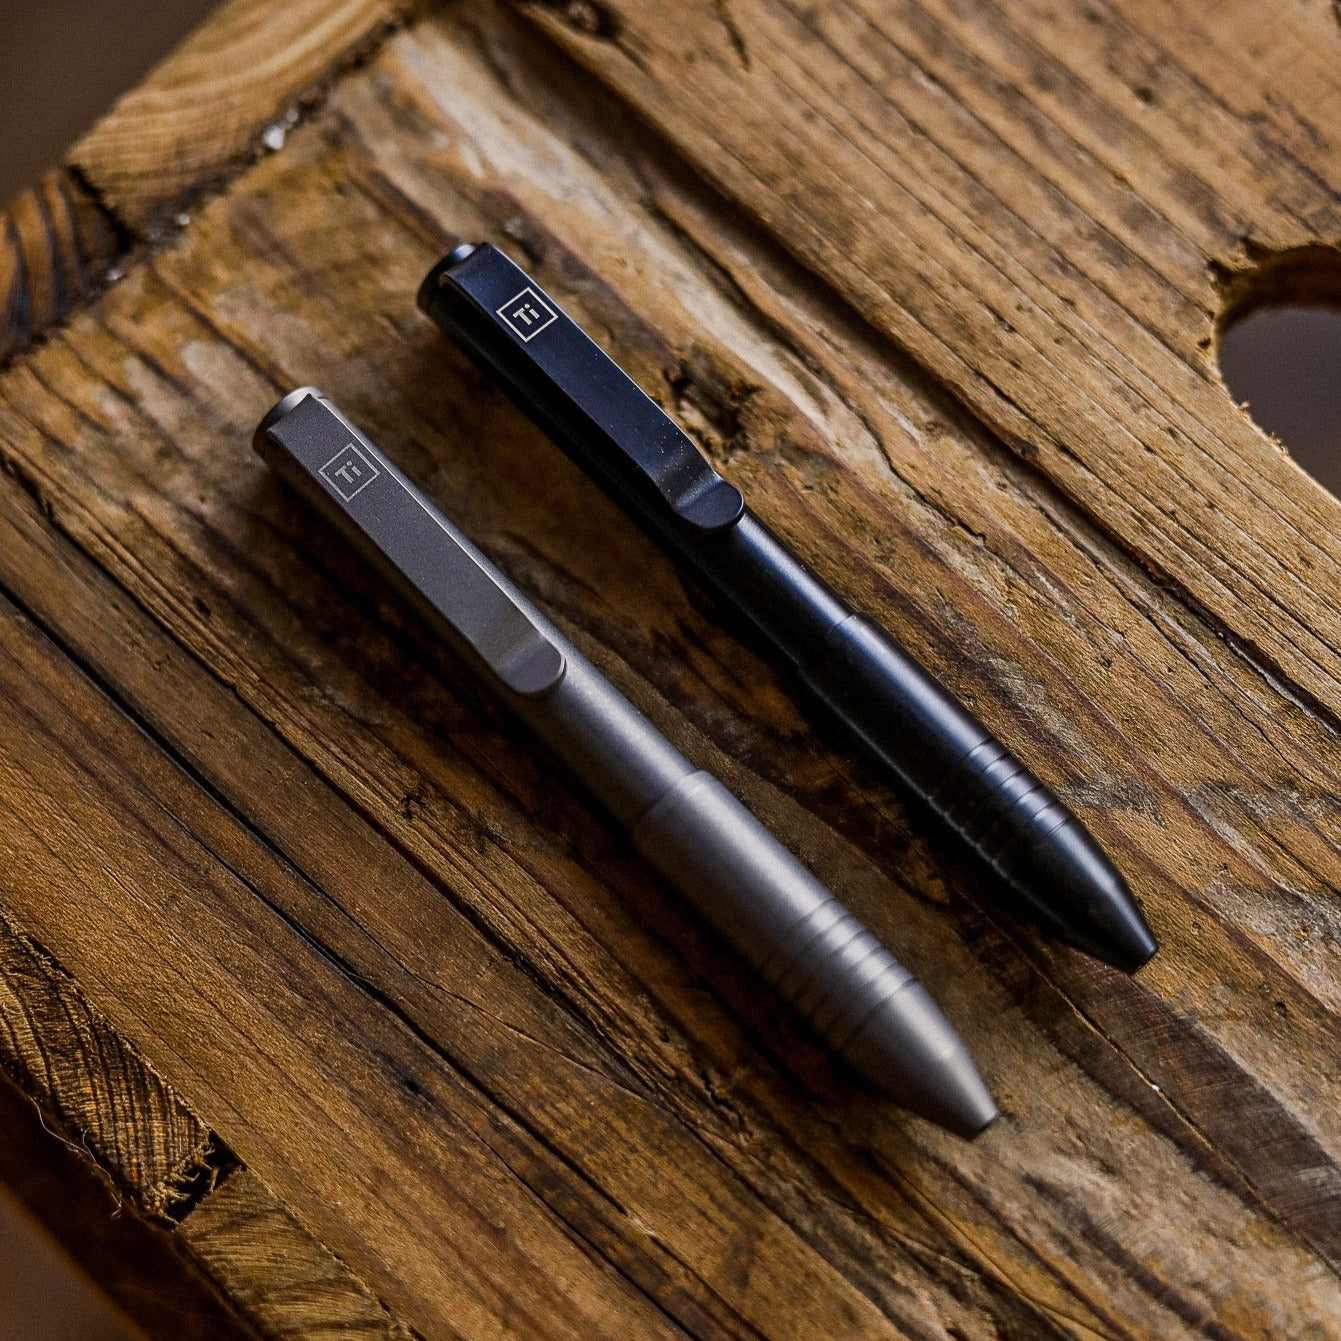 Big Idea Design Ti Pocket Pro : The Auto Adjusting EDC Pen - Titanium Stonewashed